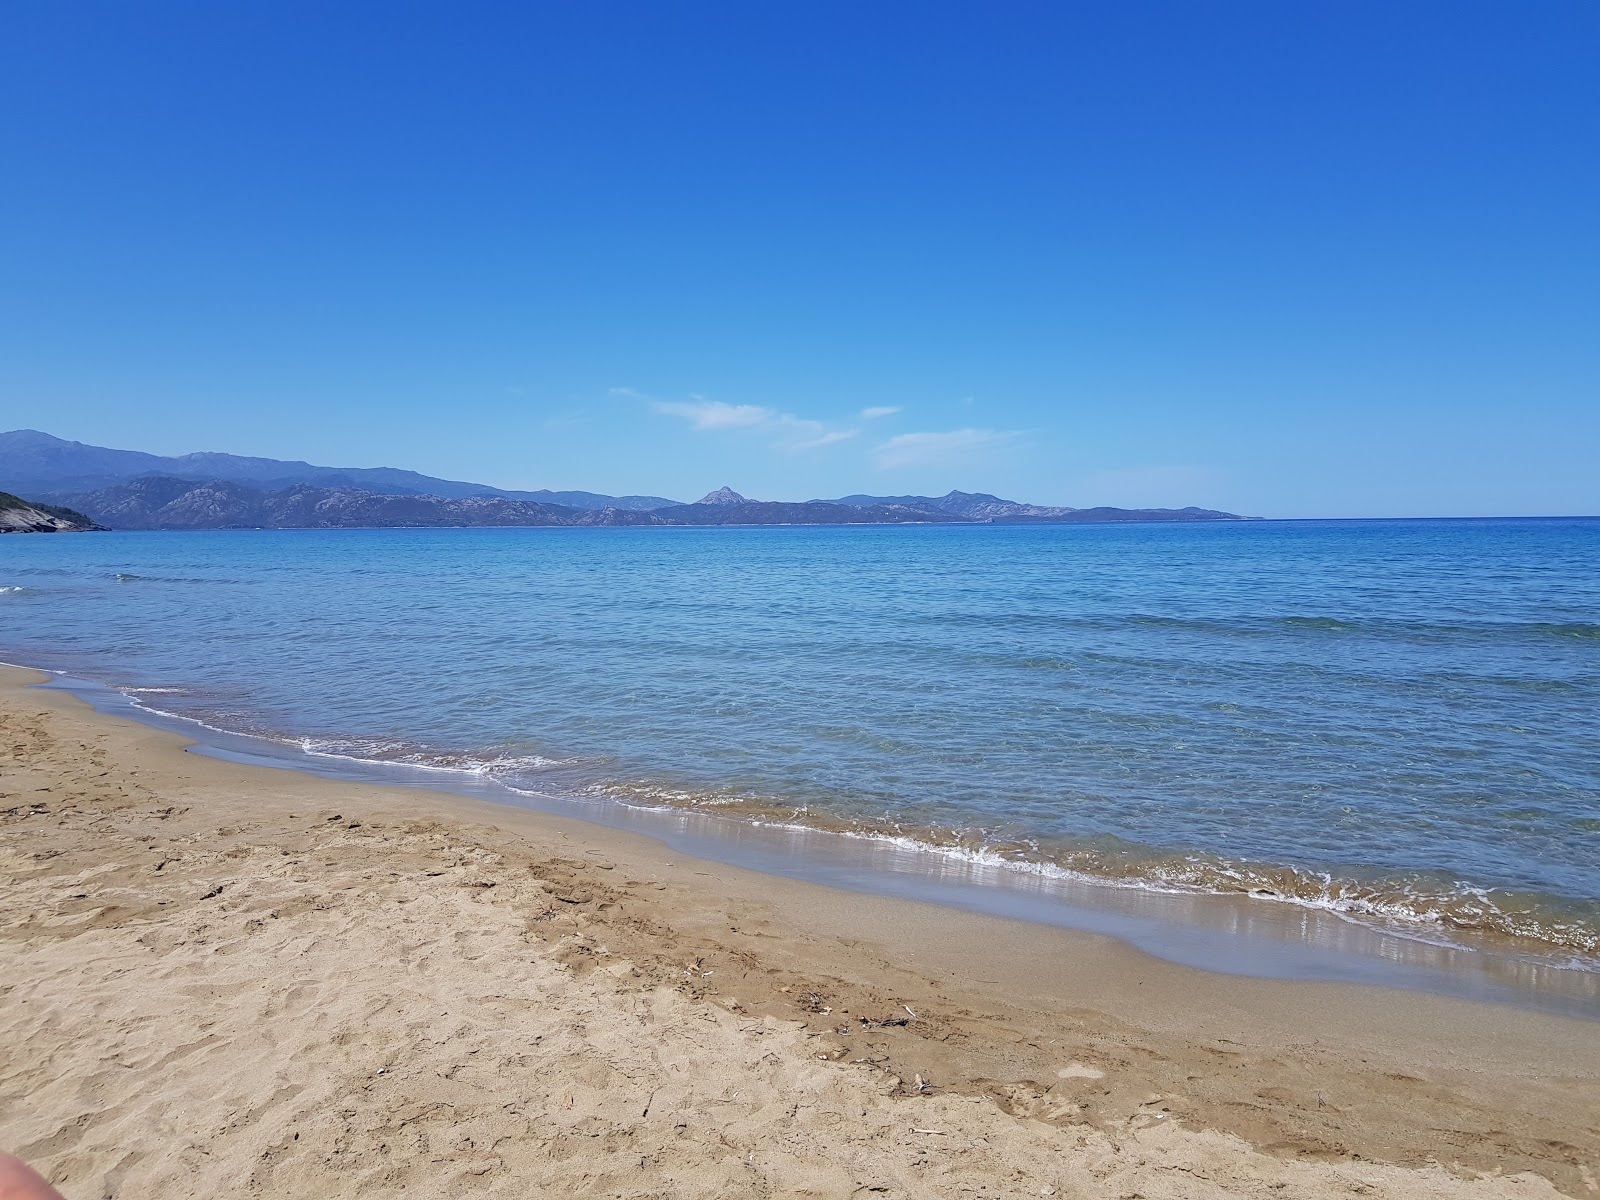 Foto de Farinole beach - lugar popular entre os apreciadores de relaxamento